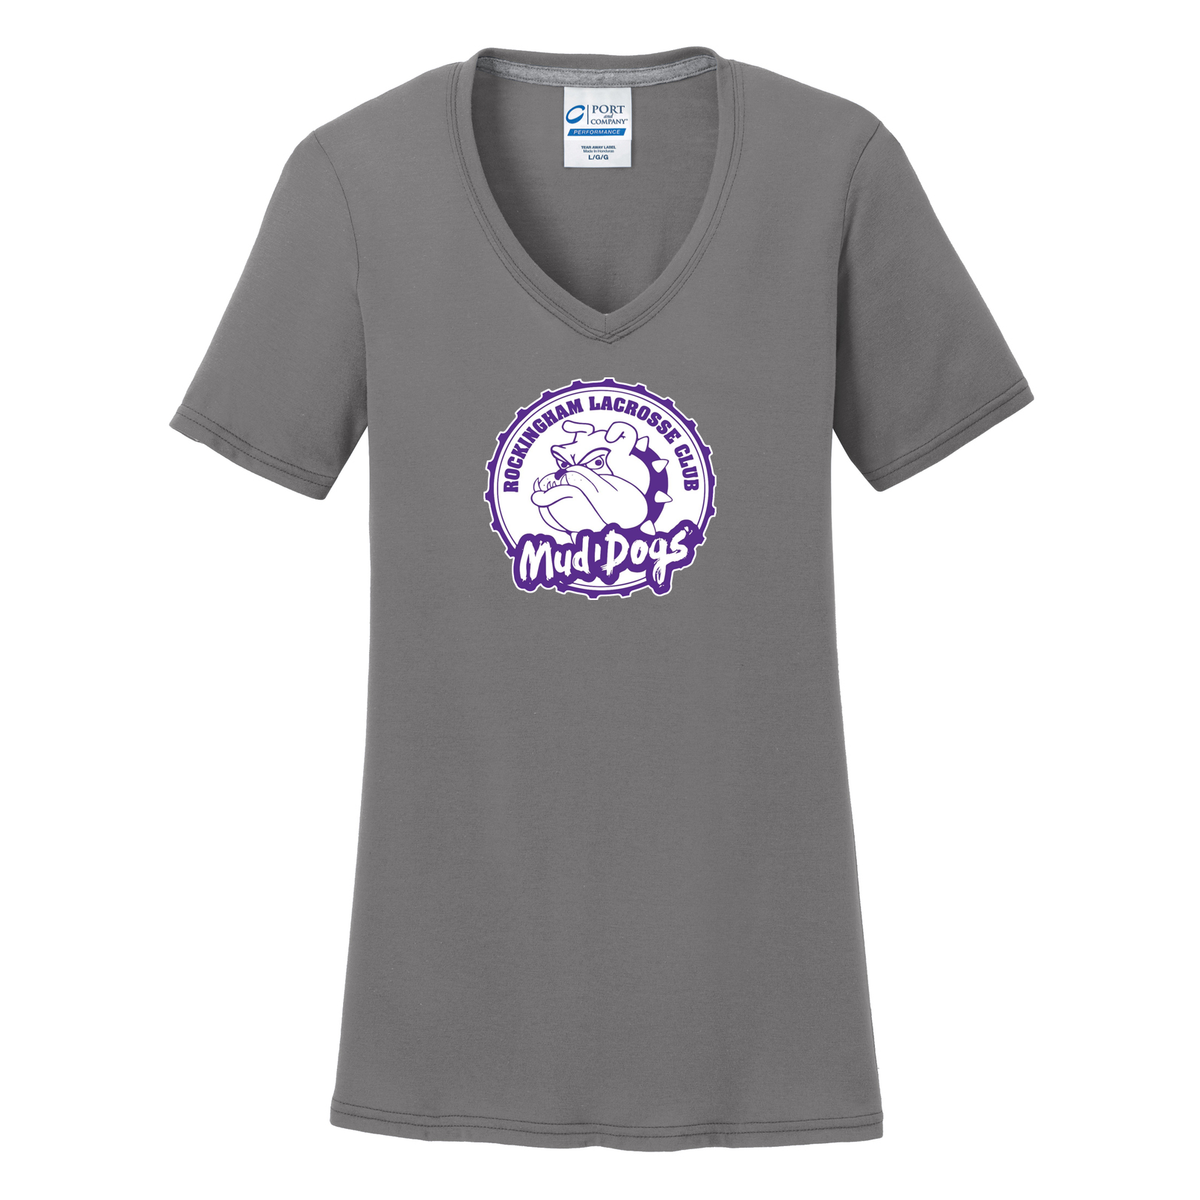 Rockingham Lacrosse Club Women's T-Shirt